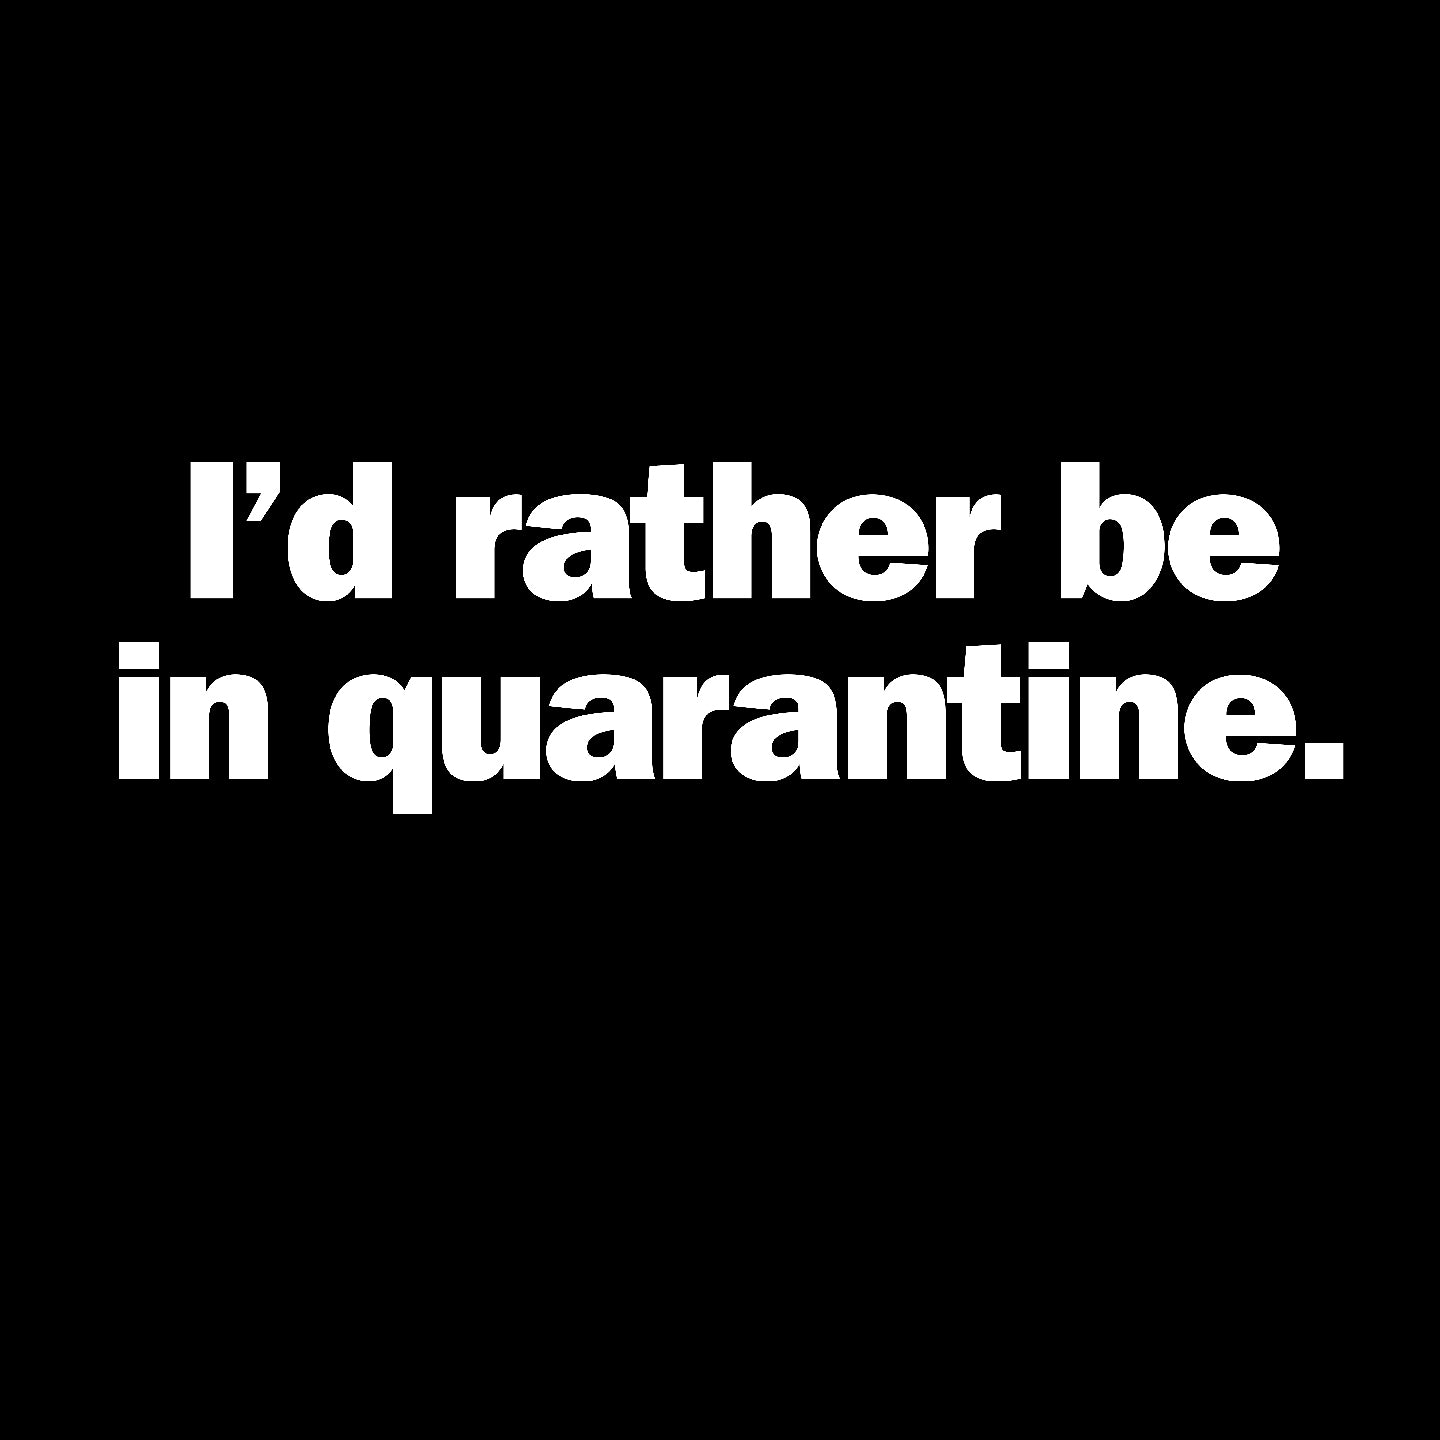 I'd rather be in quarantine. - T-Shirt